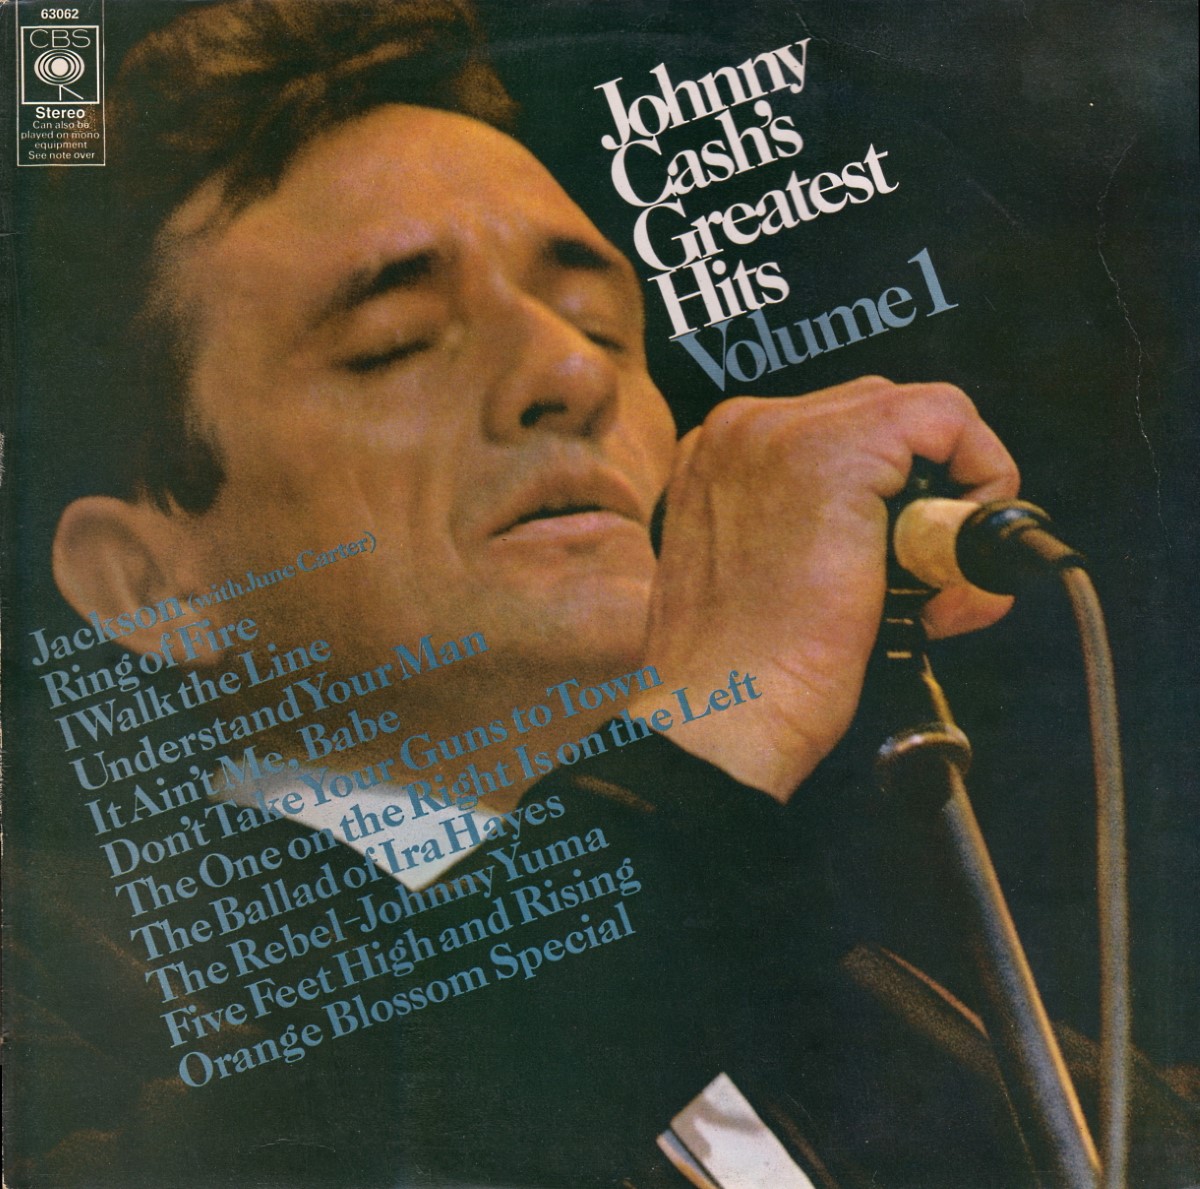 Johnny Cash - Johnny Cash's Greatest Hits Volume 1 (1967)